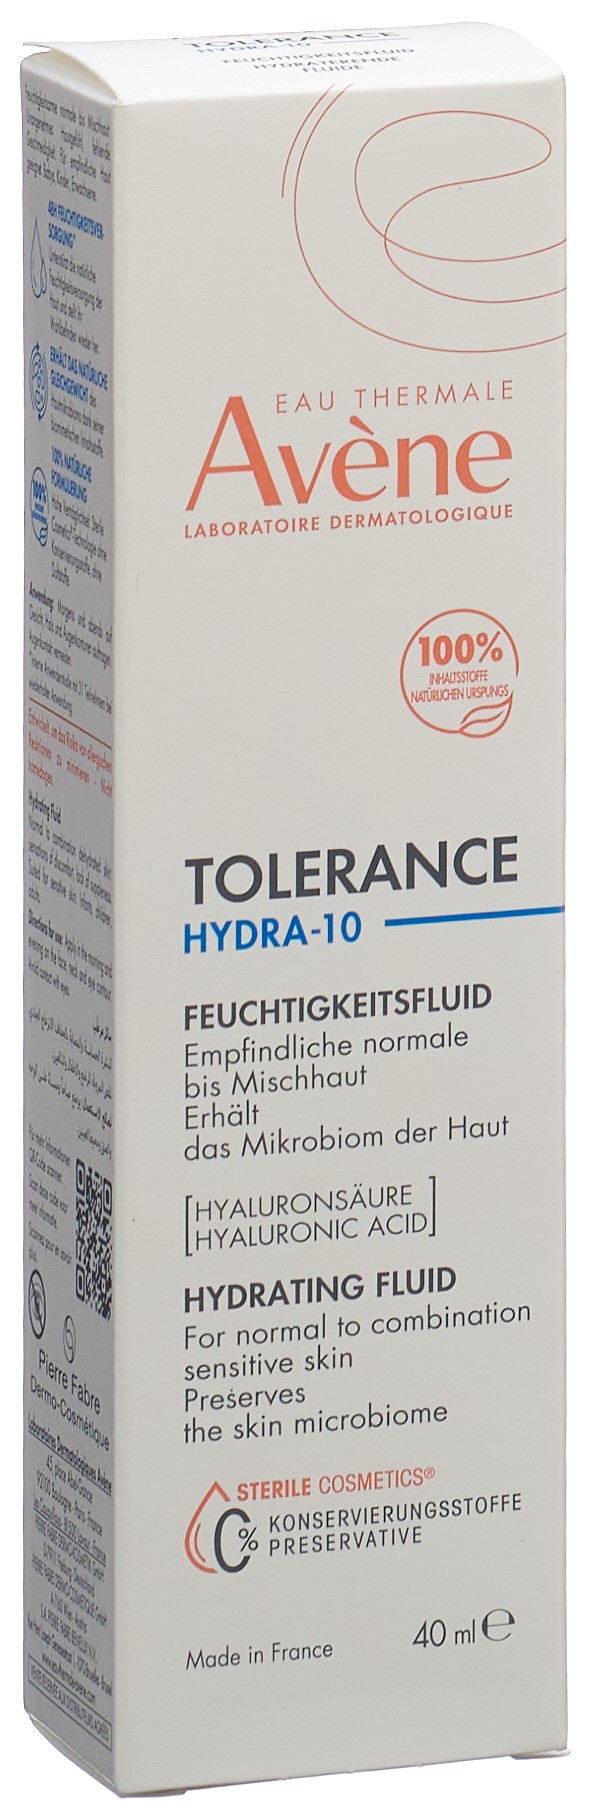 AVENE Tolér Hydra-10 Feuchtigkeitsflu Tb 40 ml